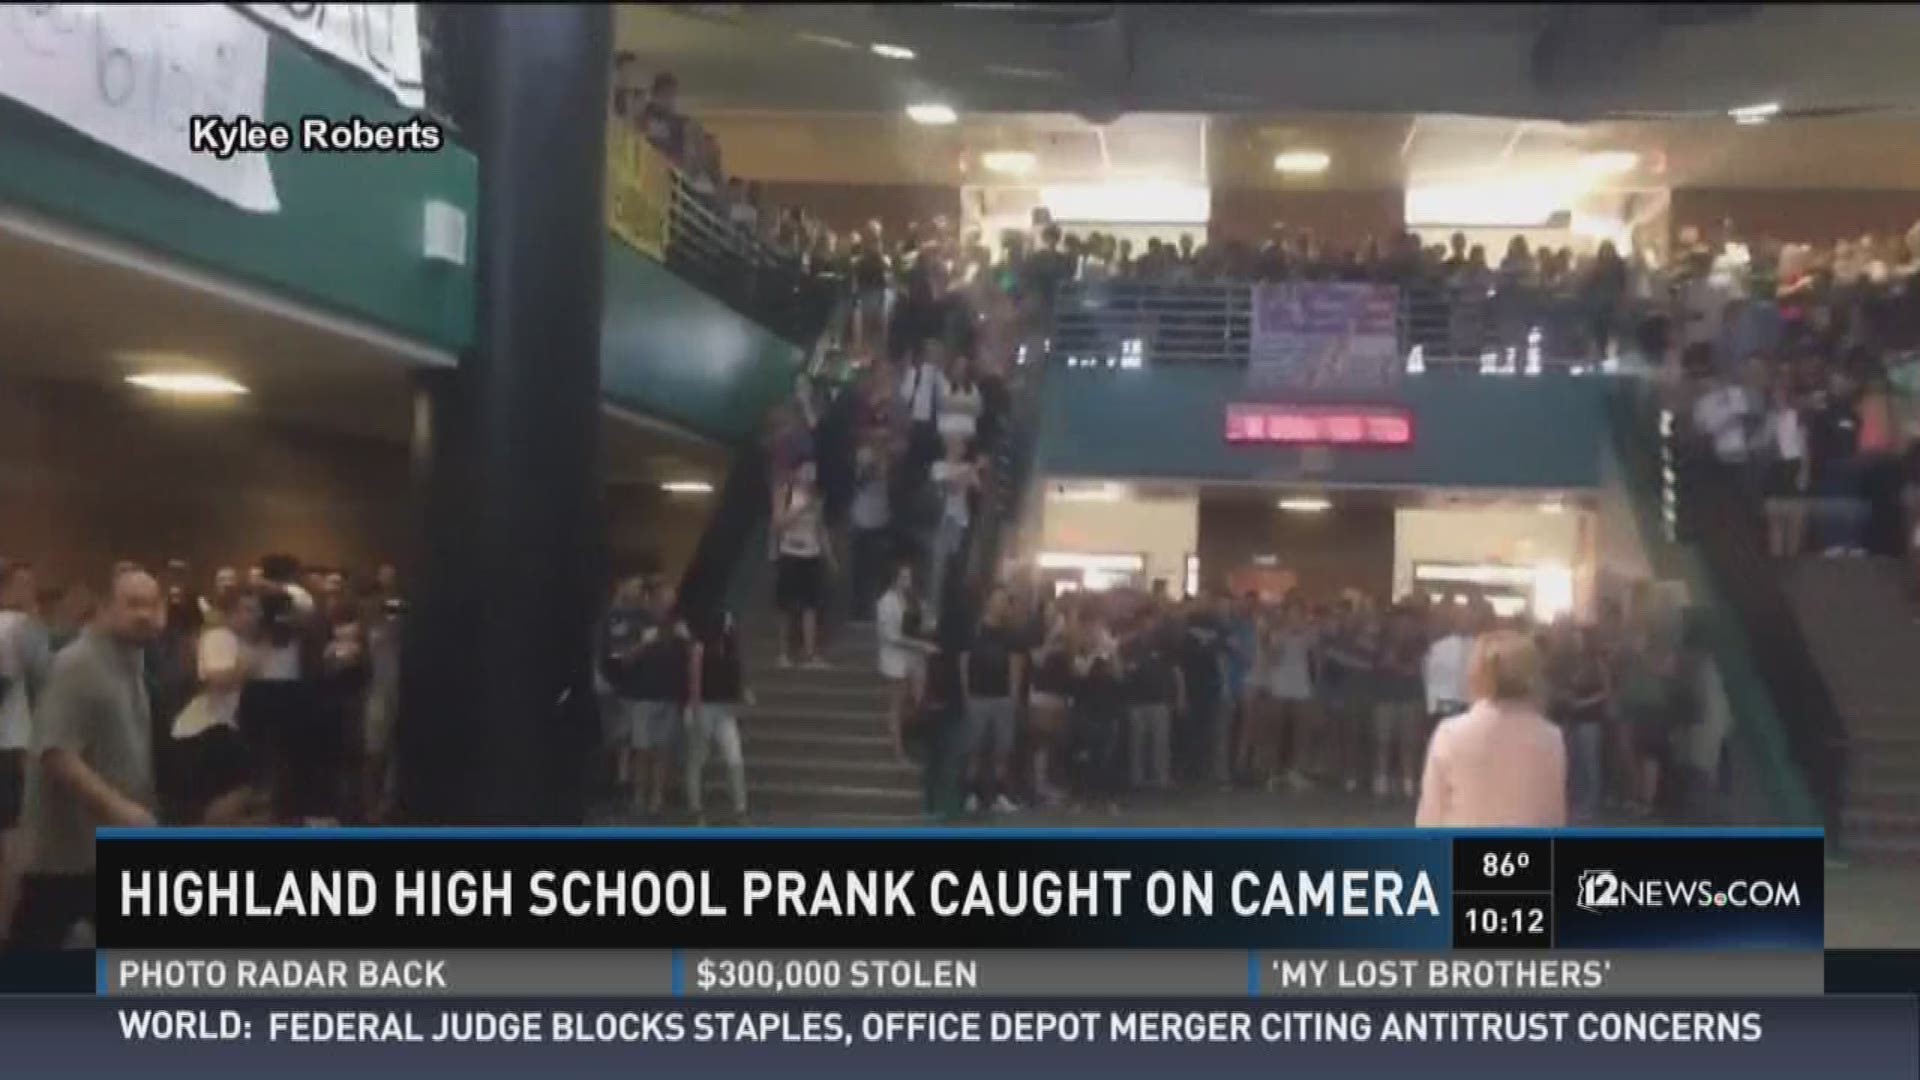 Highland high school prank caught on camera.